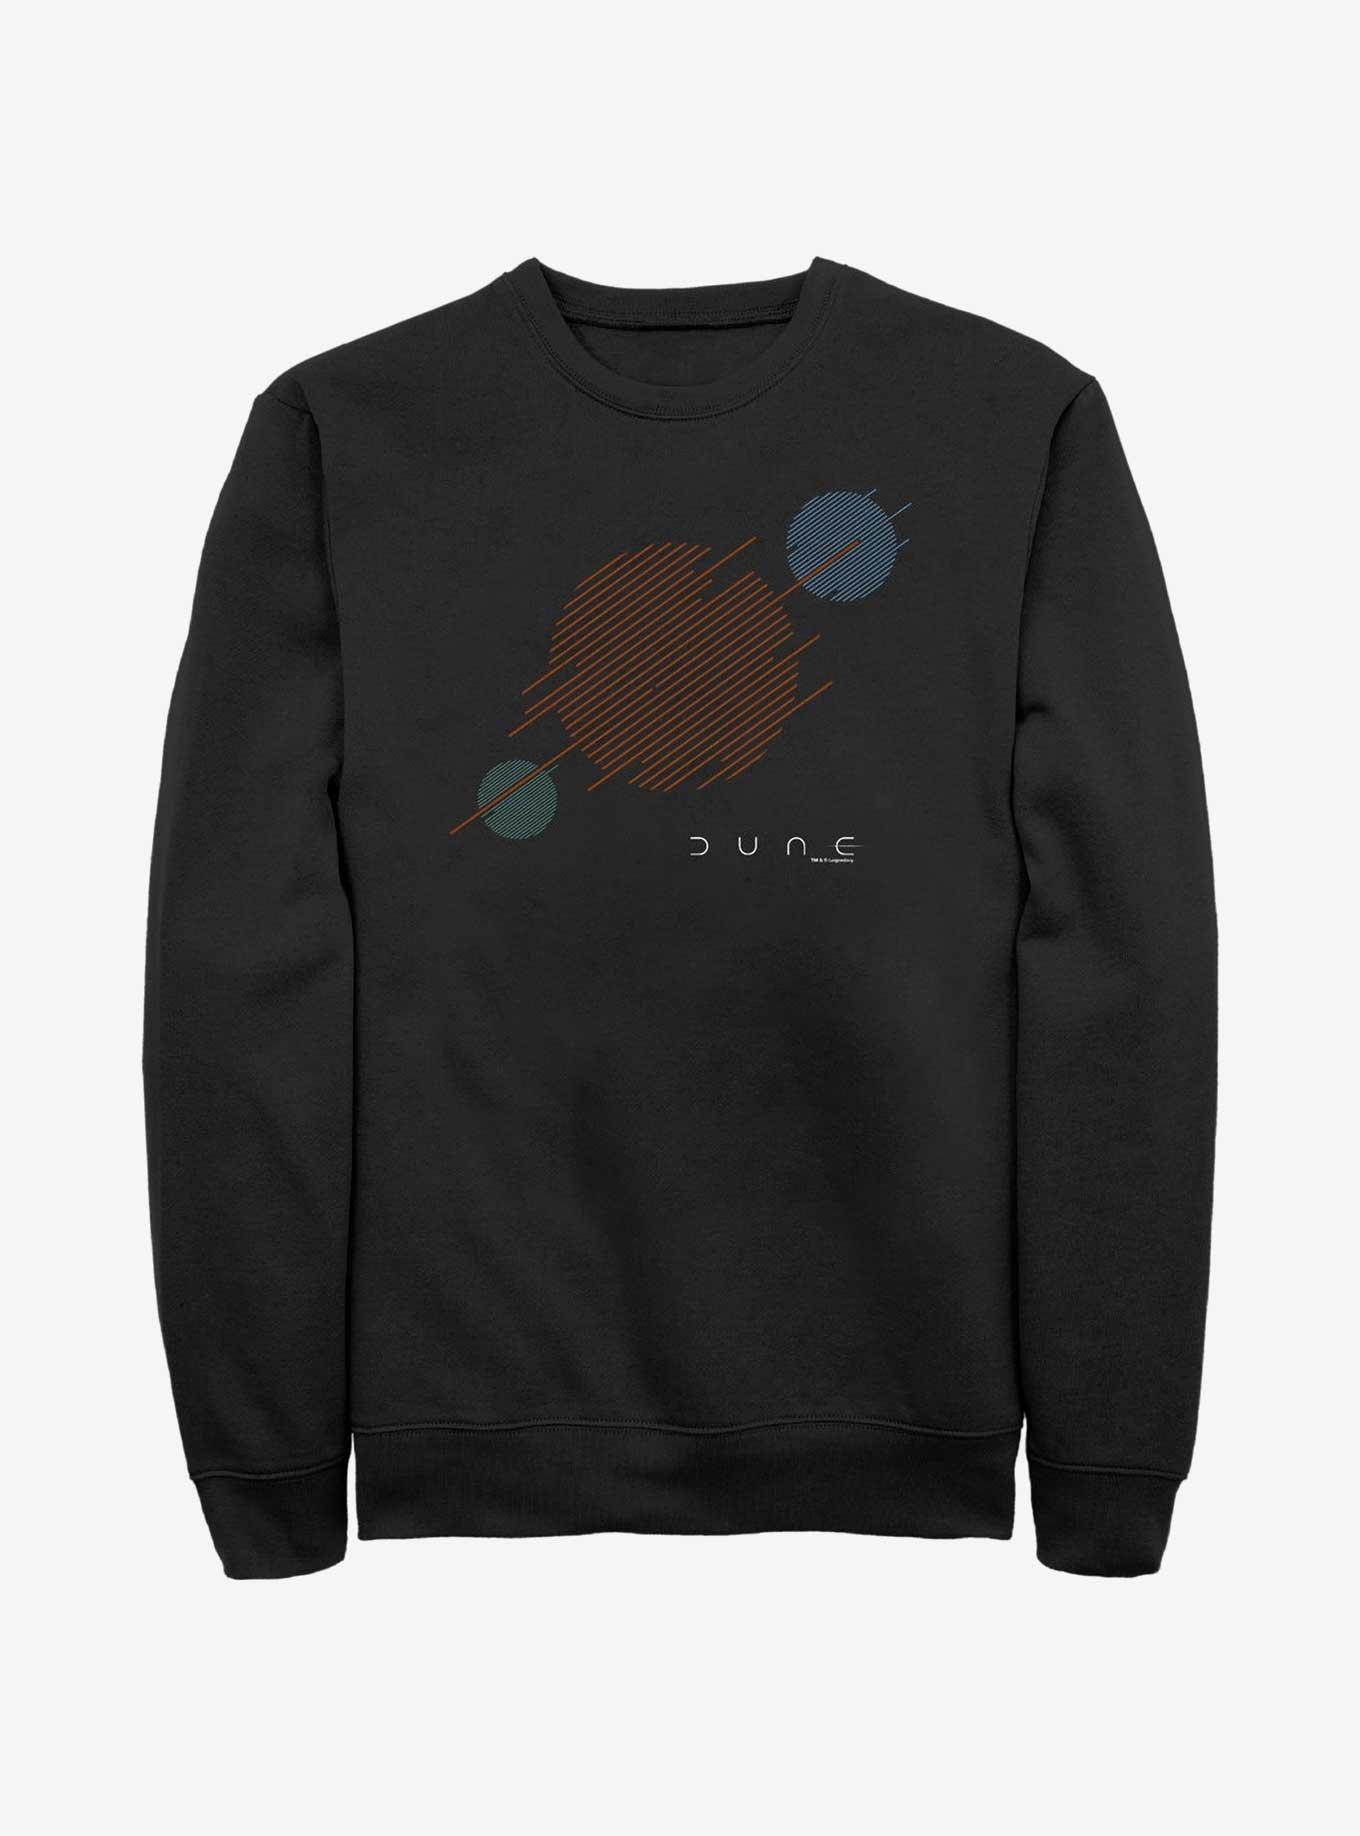 Dune Universe Icons Sweatshirt, BLACK, hi-res